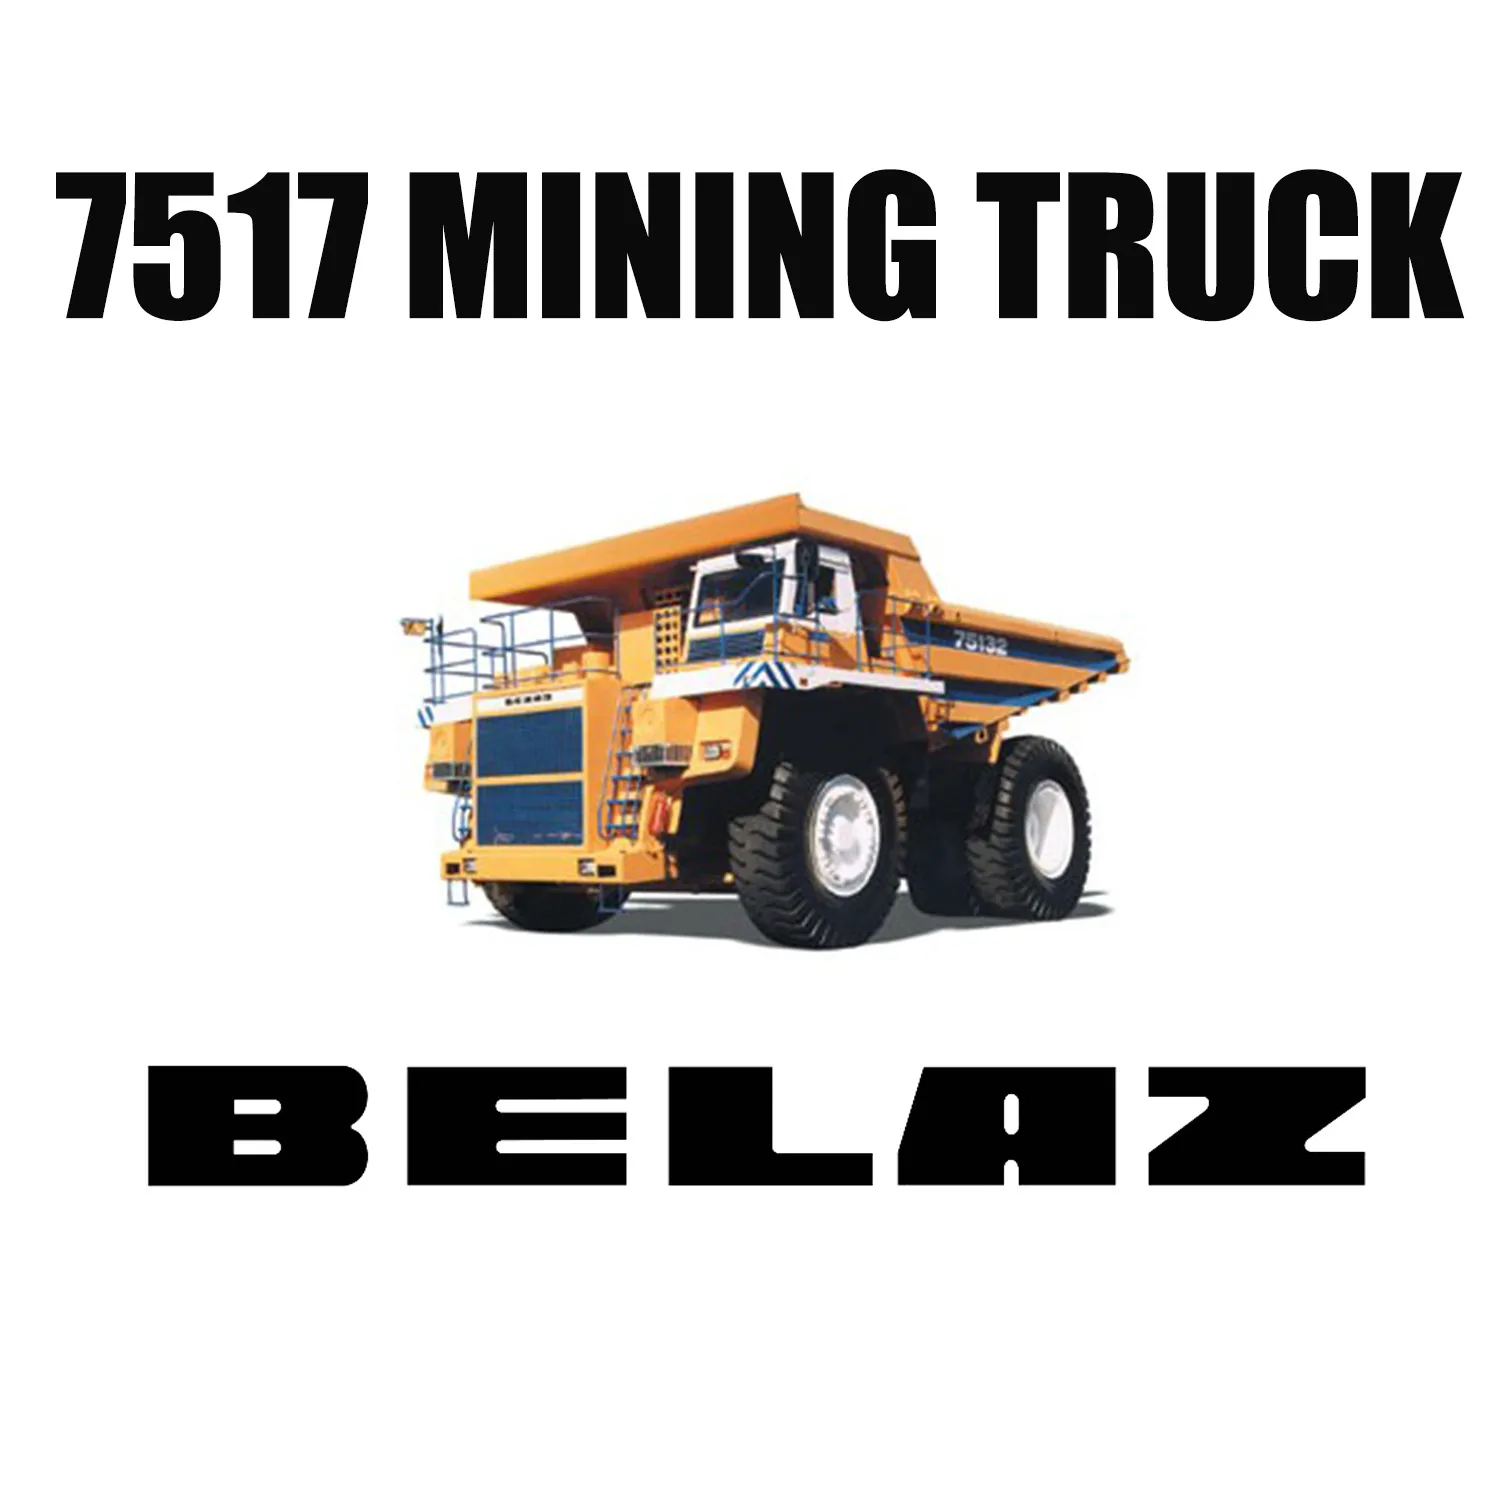 36,00R51 Ελαστικά εκτός δρόμου εξόρυξης τοποθετημένα σε BELAZ-7517 για ανθρακωρυχείο